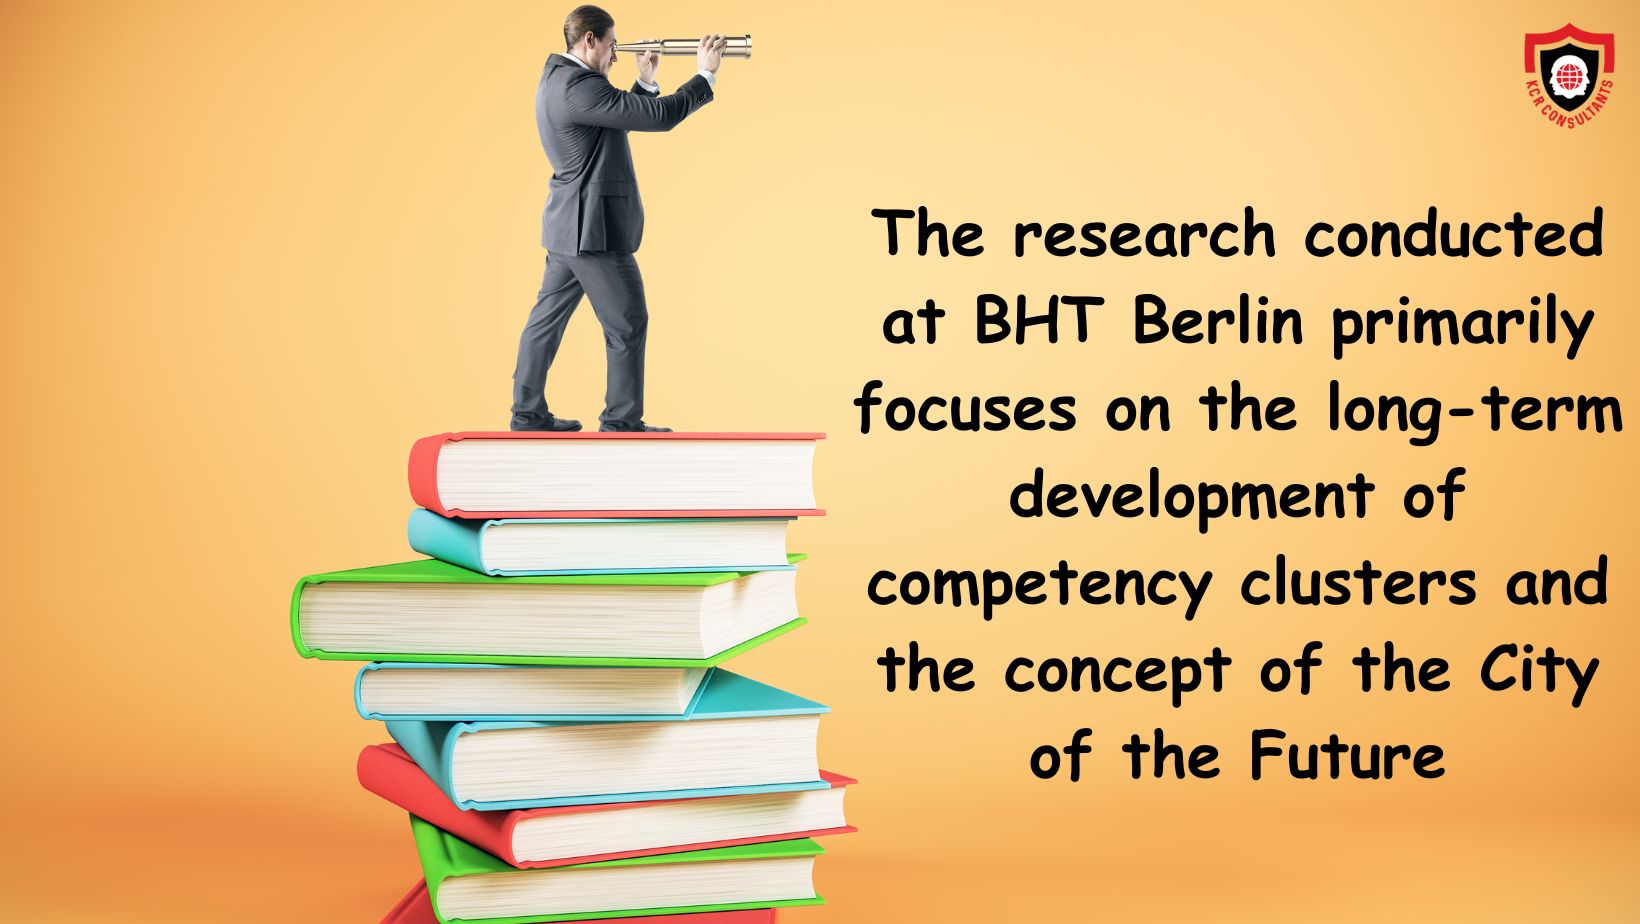 BHT Berlin Research